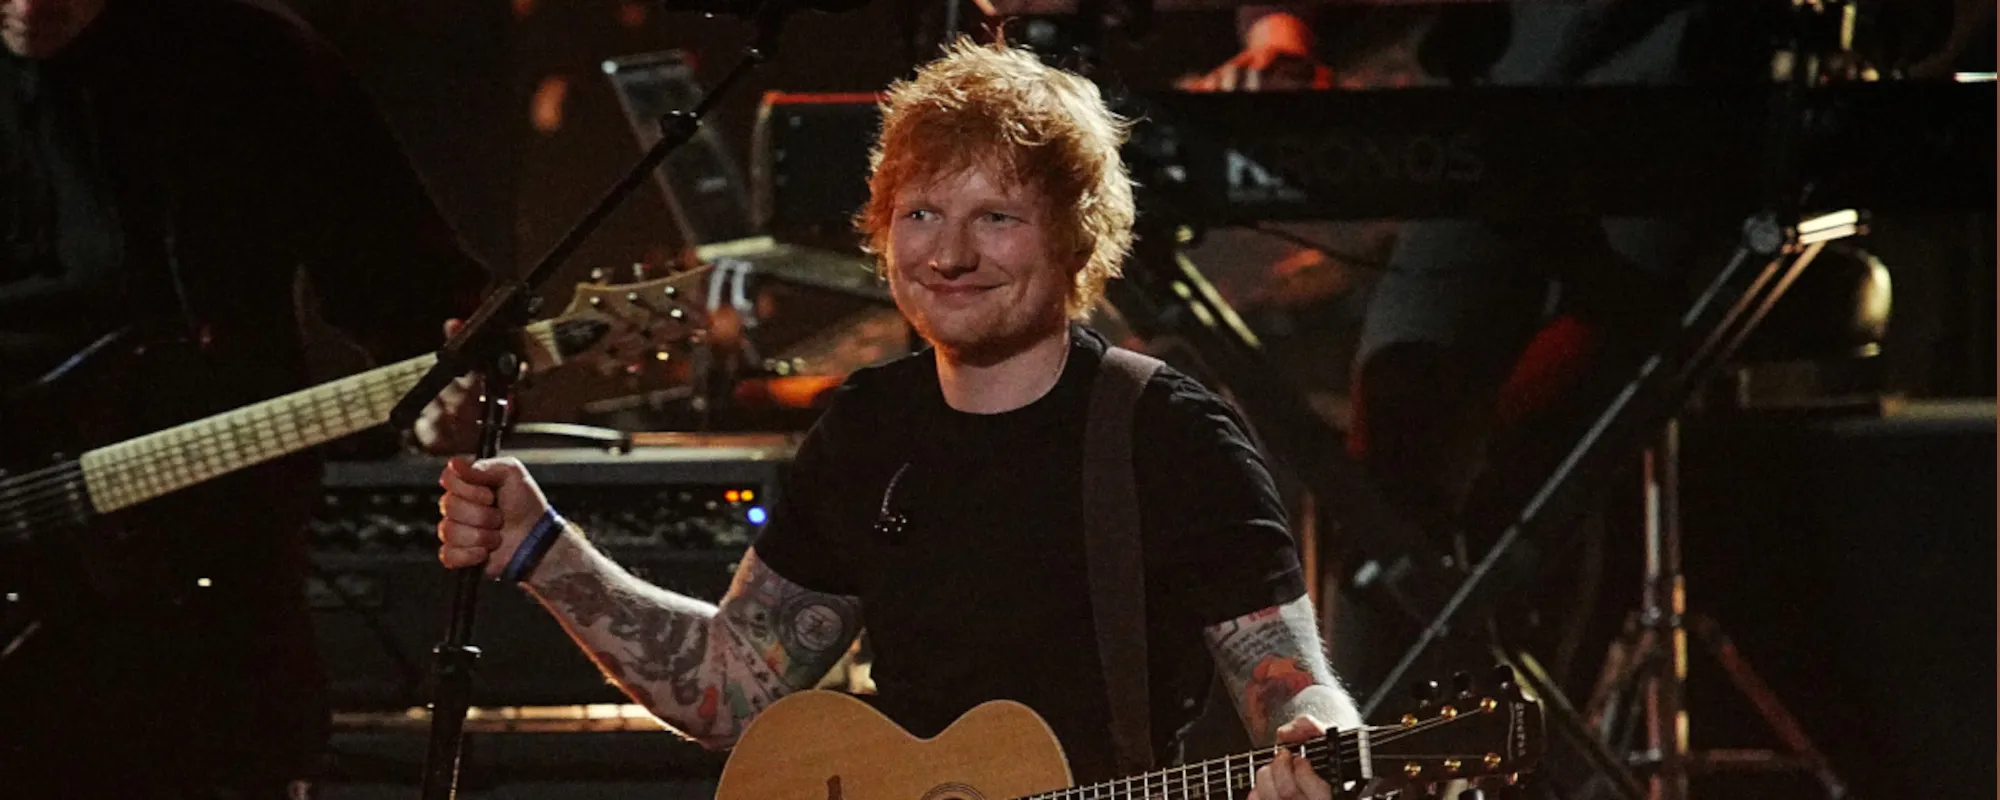 The Top 10 Ed Sheeran Songs